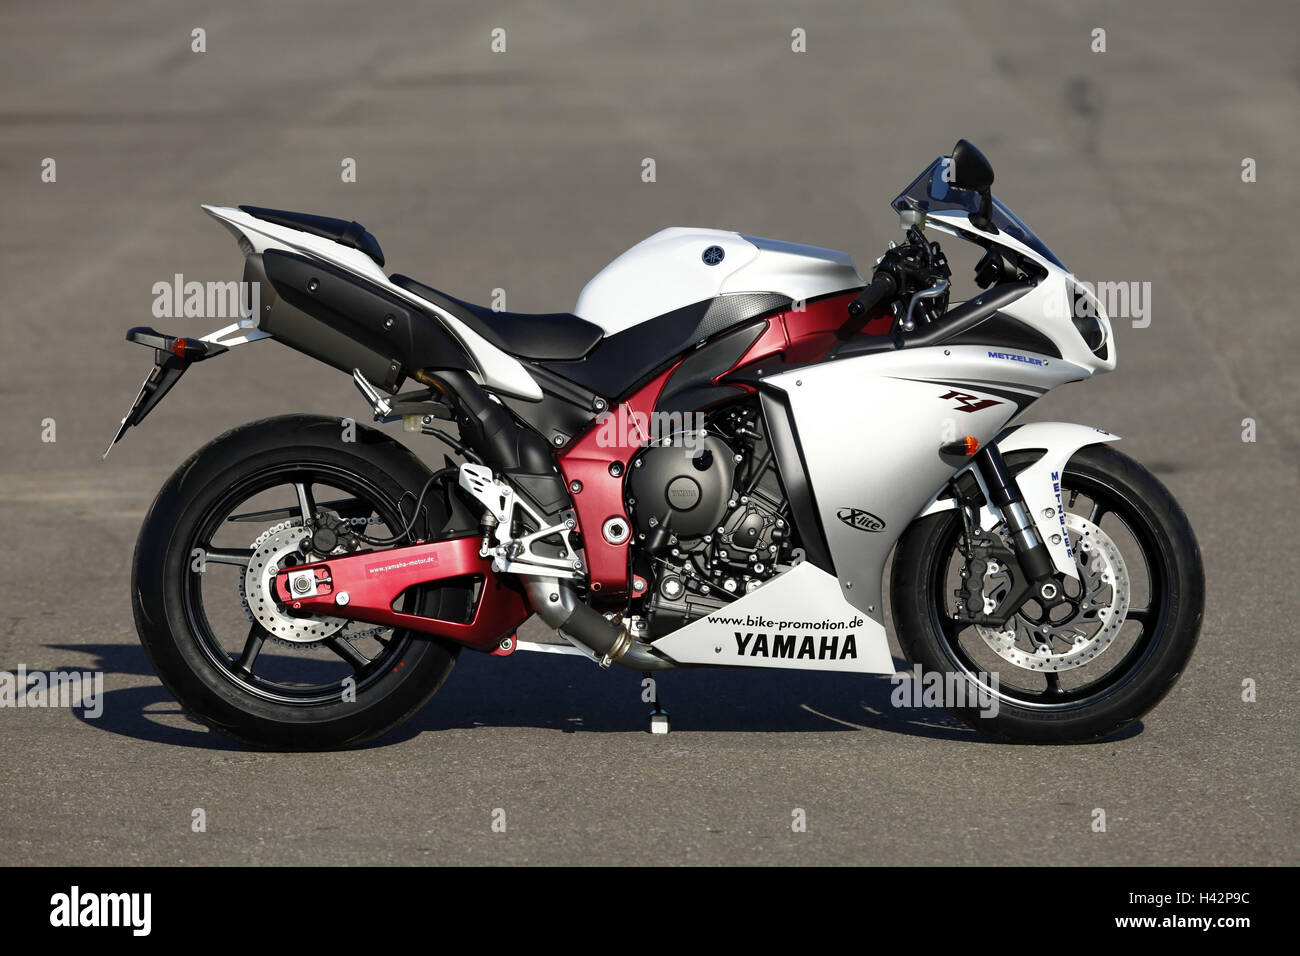 Yamaha R1, no property release, Stock Photo